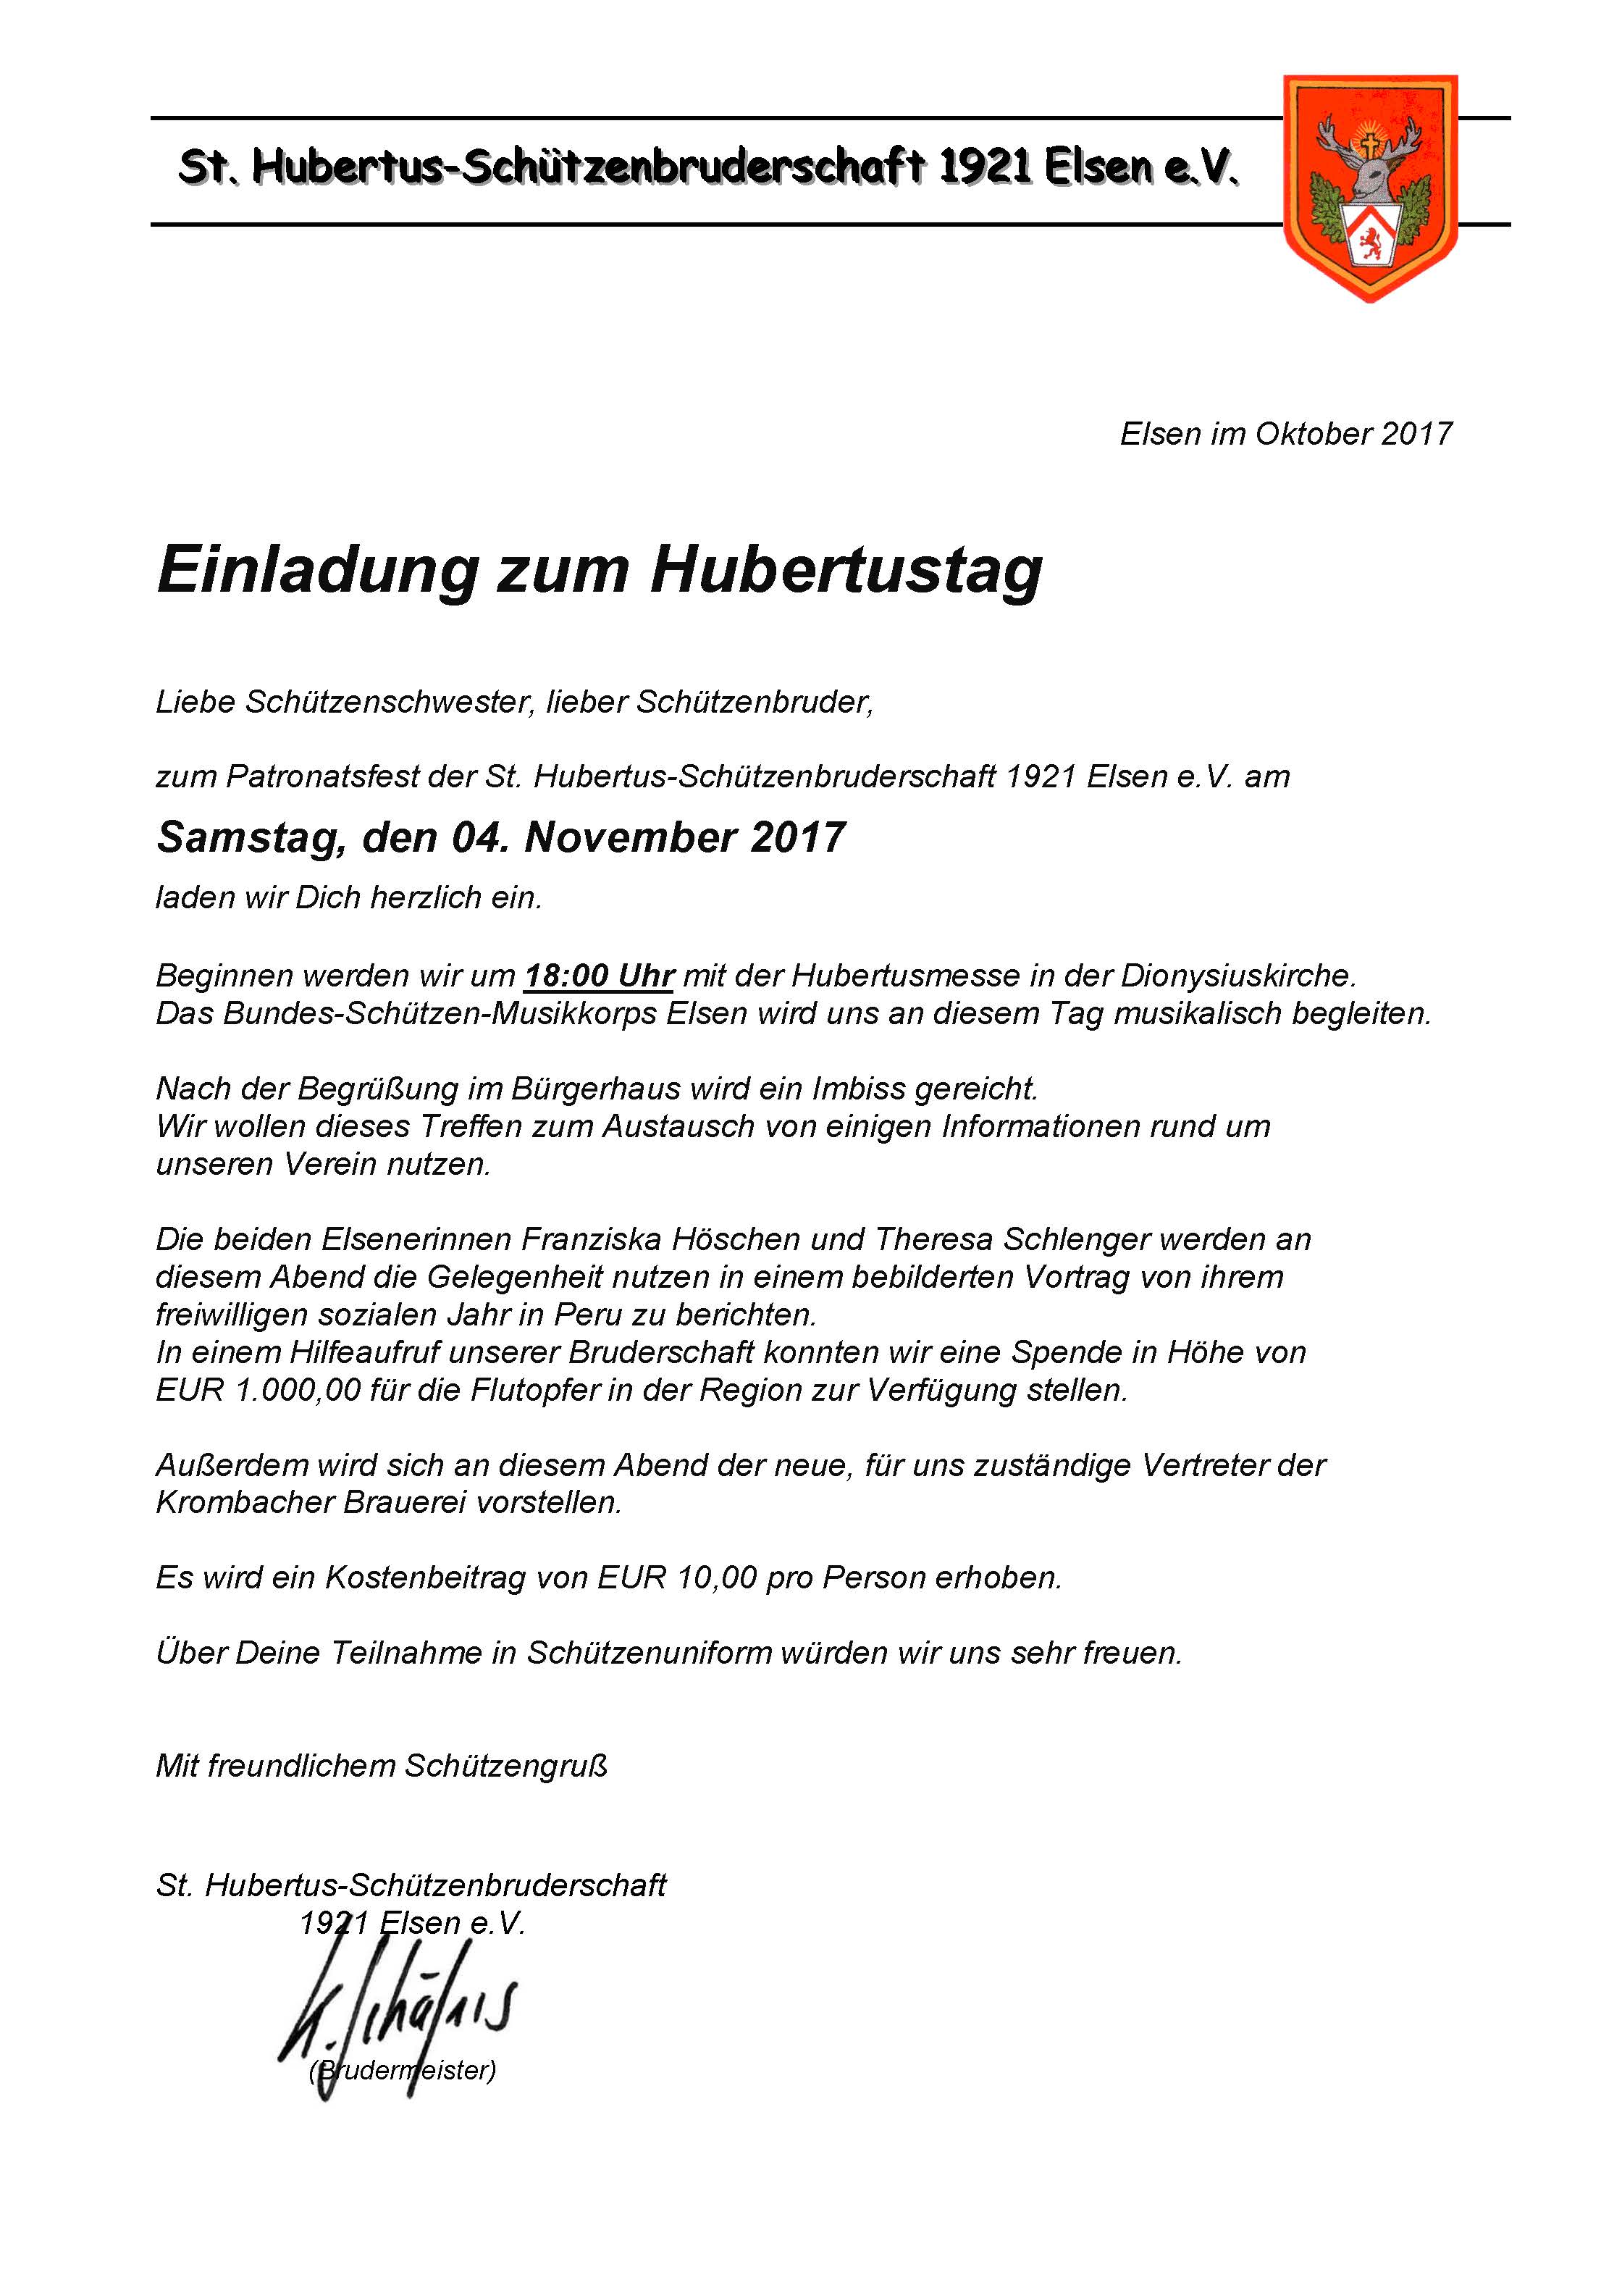 Einladung Hubertustag_2017